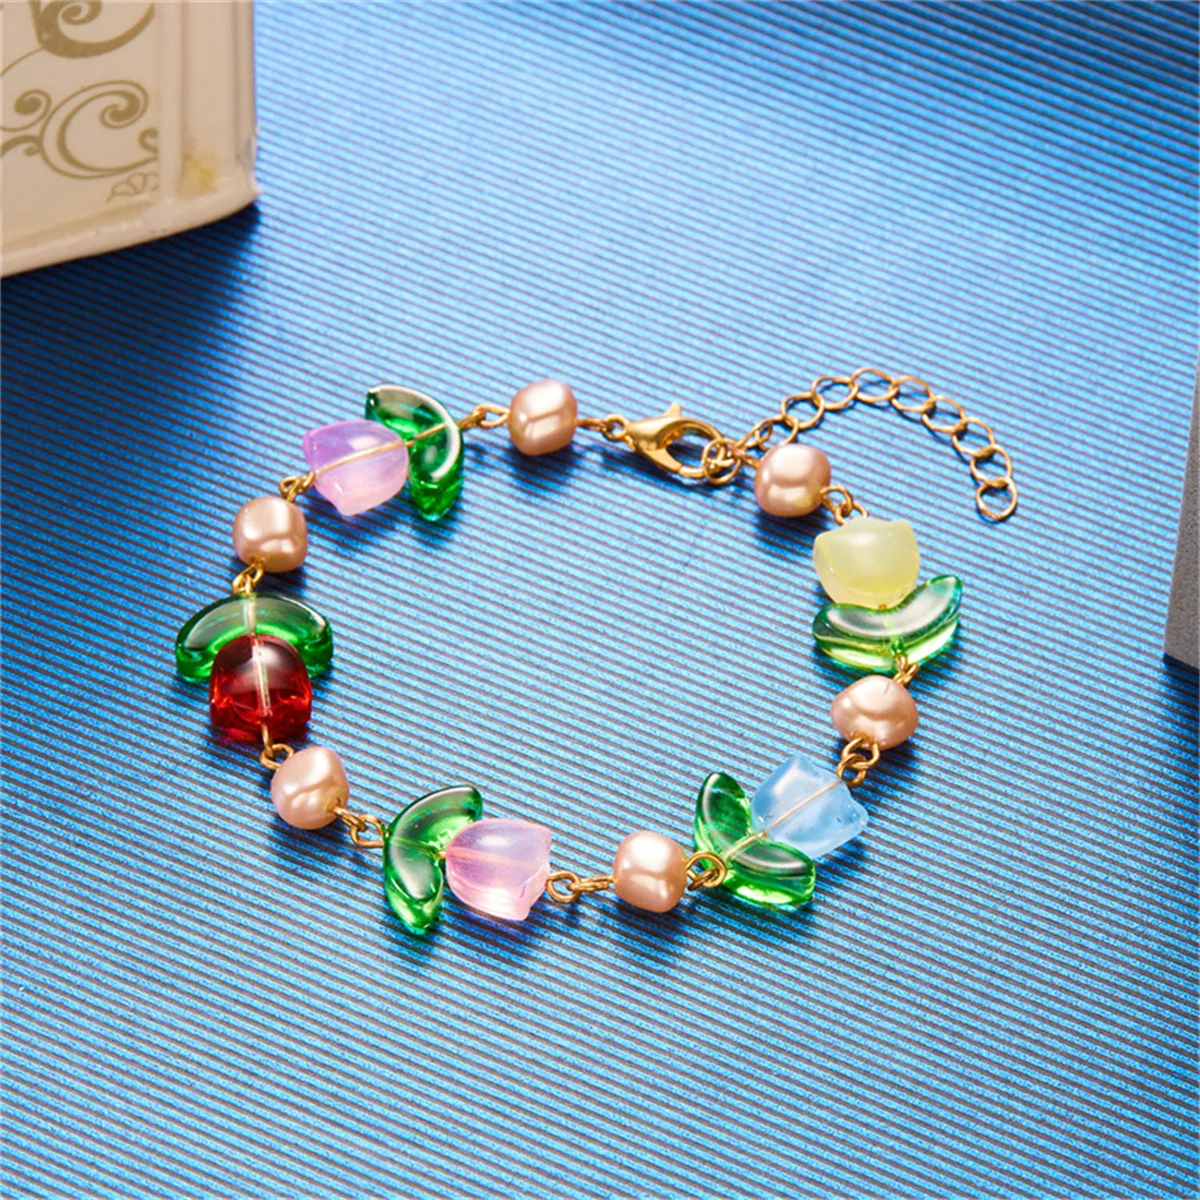 Fashion Sweet Colorful Resin Tulip Flower Bracelets for Women Girls Imitation Pearl Bracelet DIY Jewelry Wrist Gift Accessories